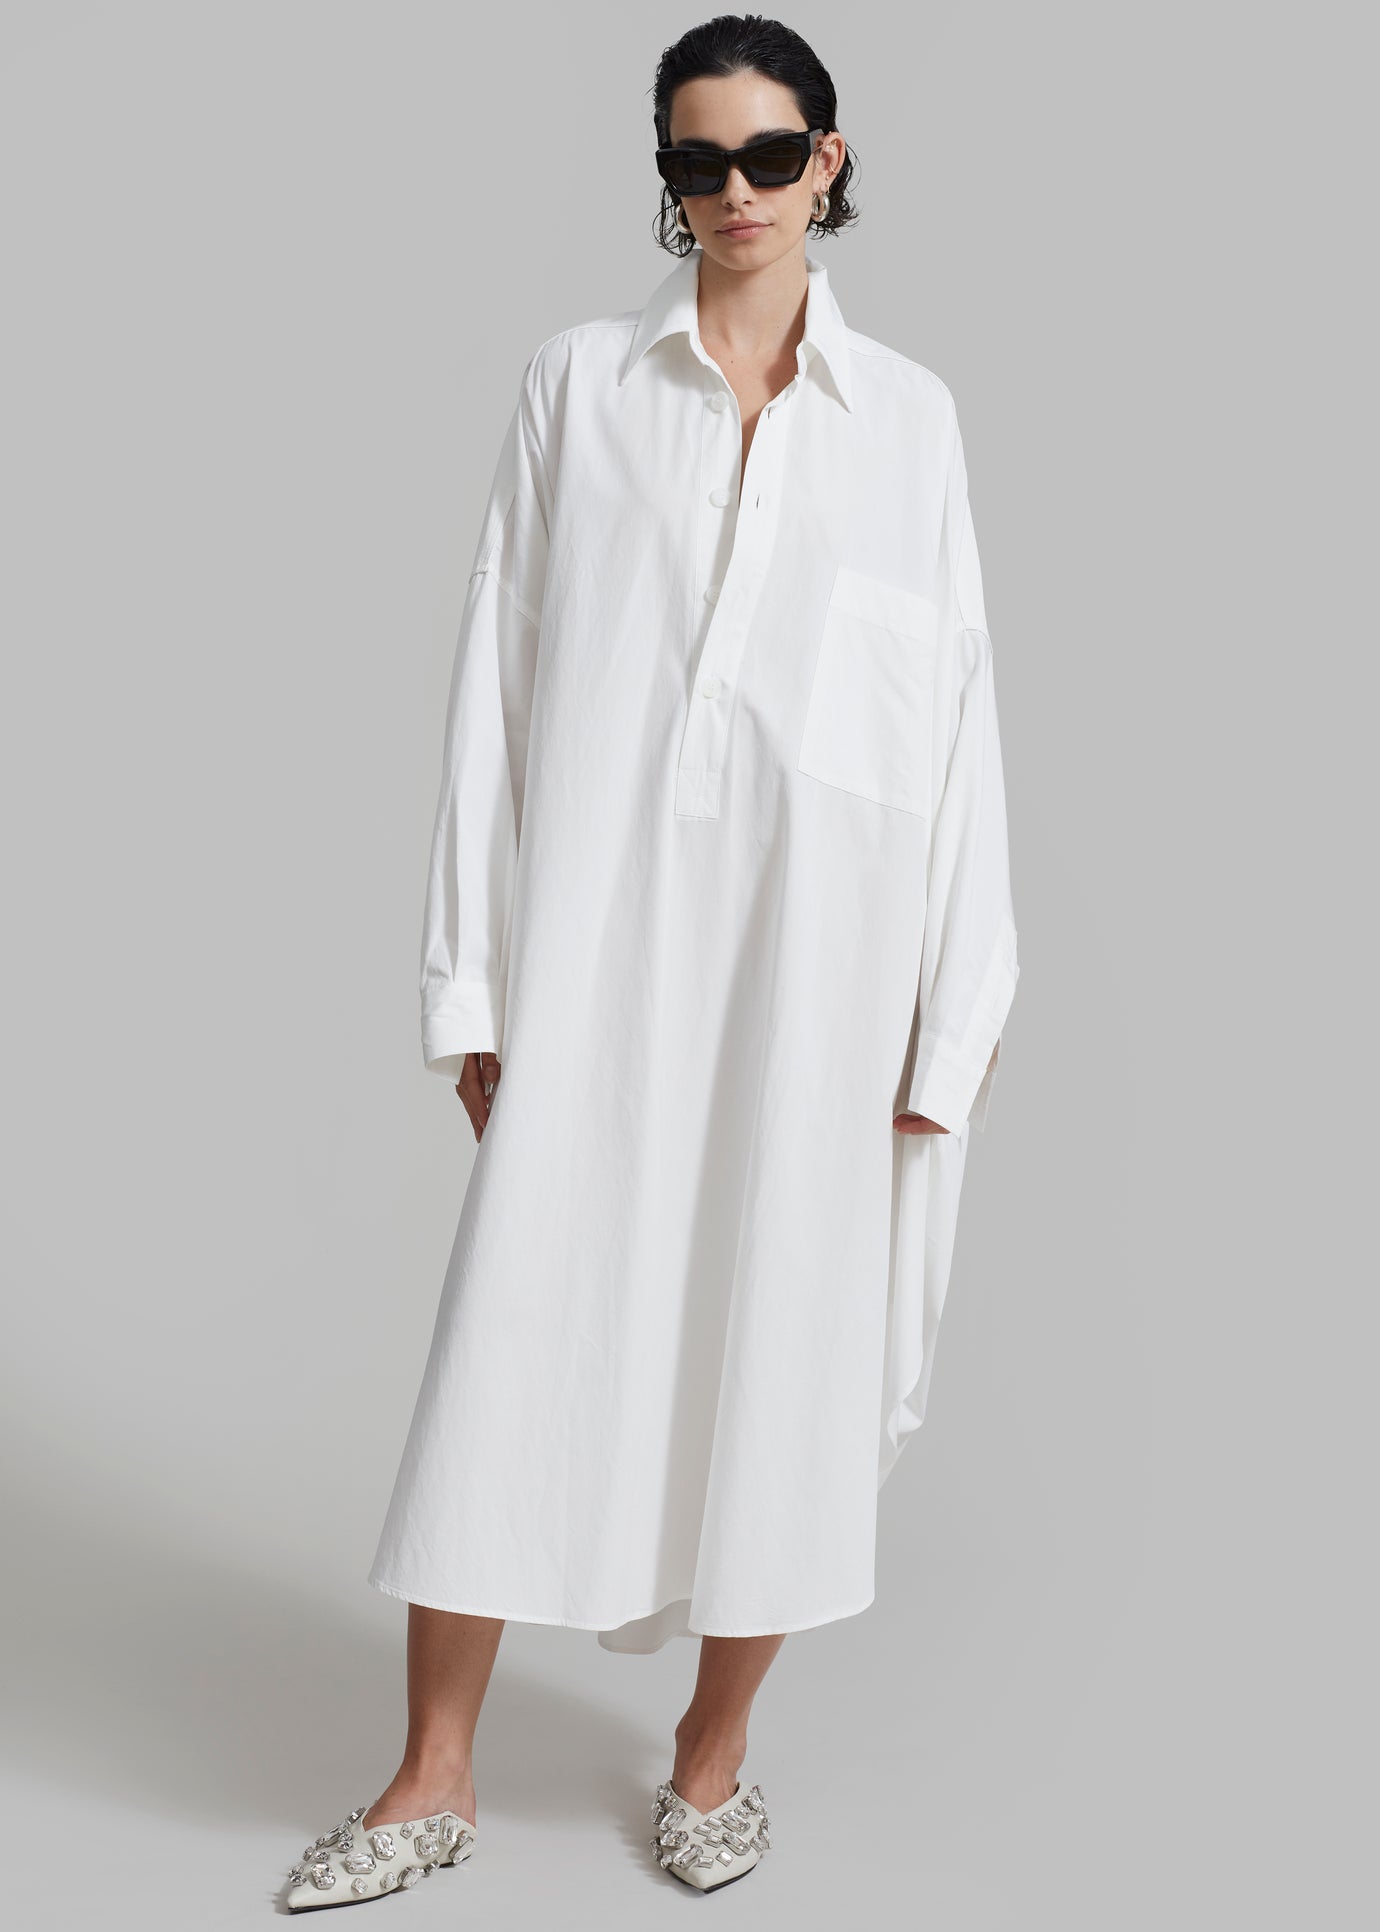 Annalise Shirt Dress - White